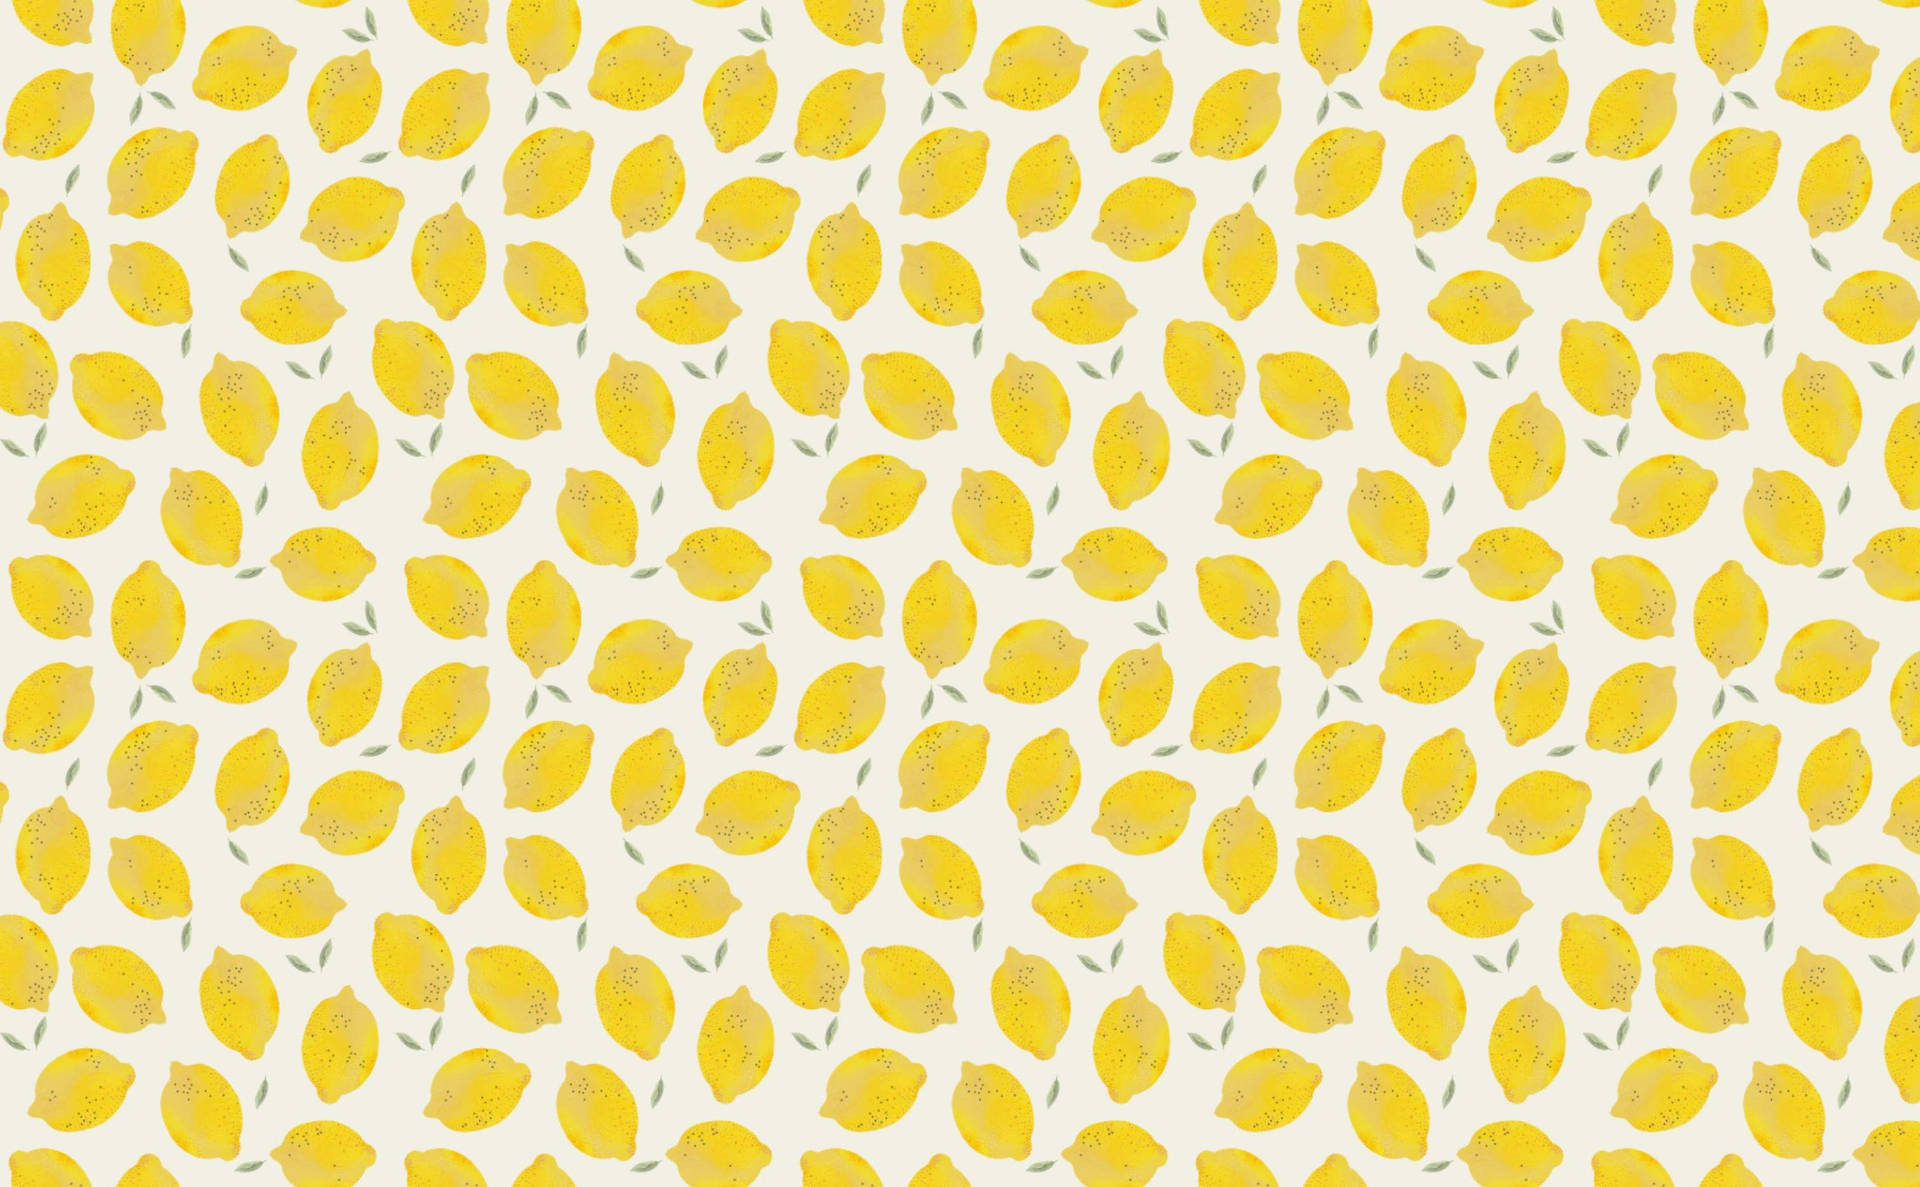 Lemon 3028X1872 Wallpaper and Background Image